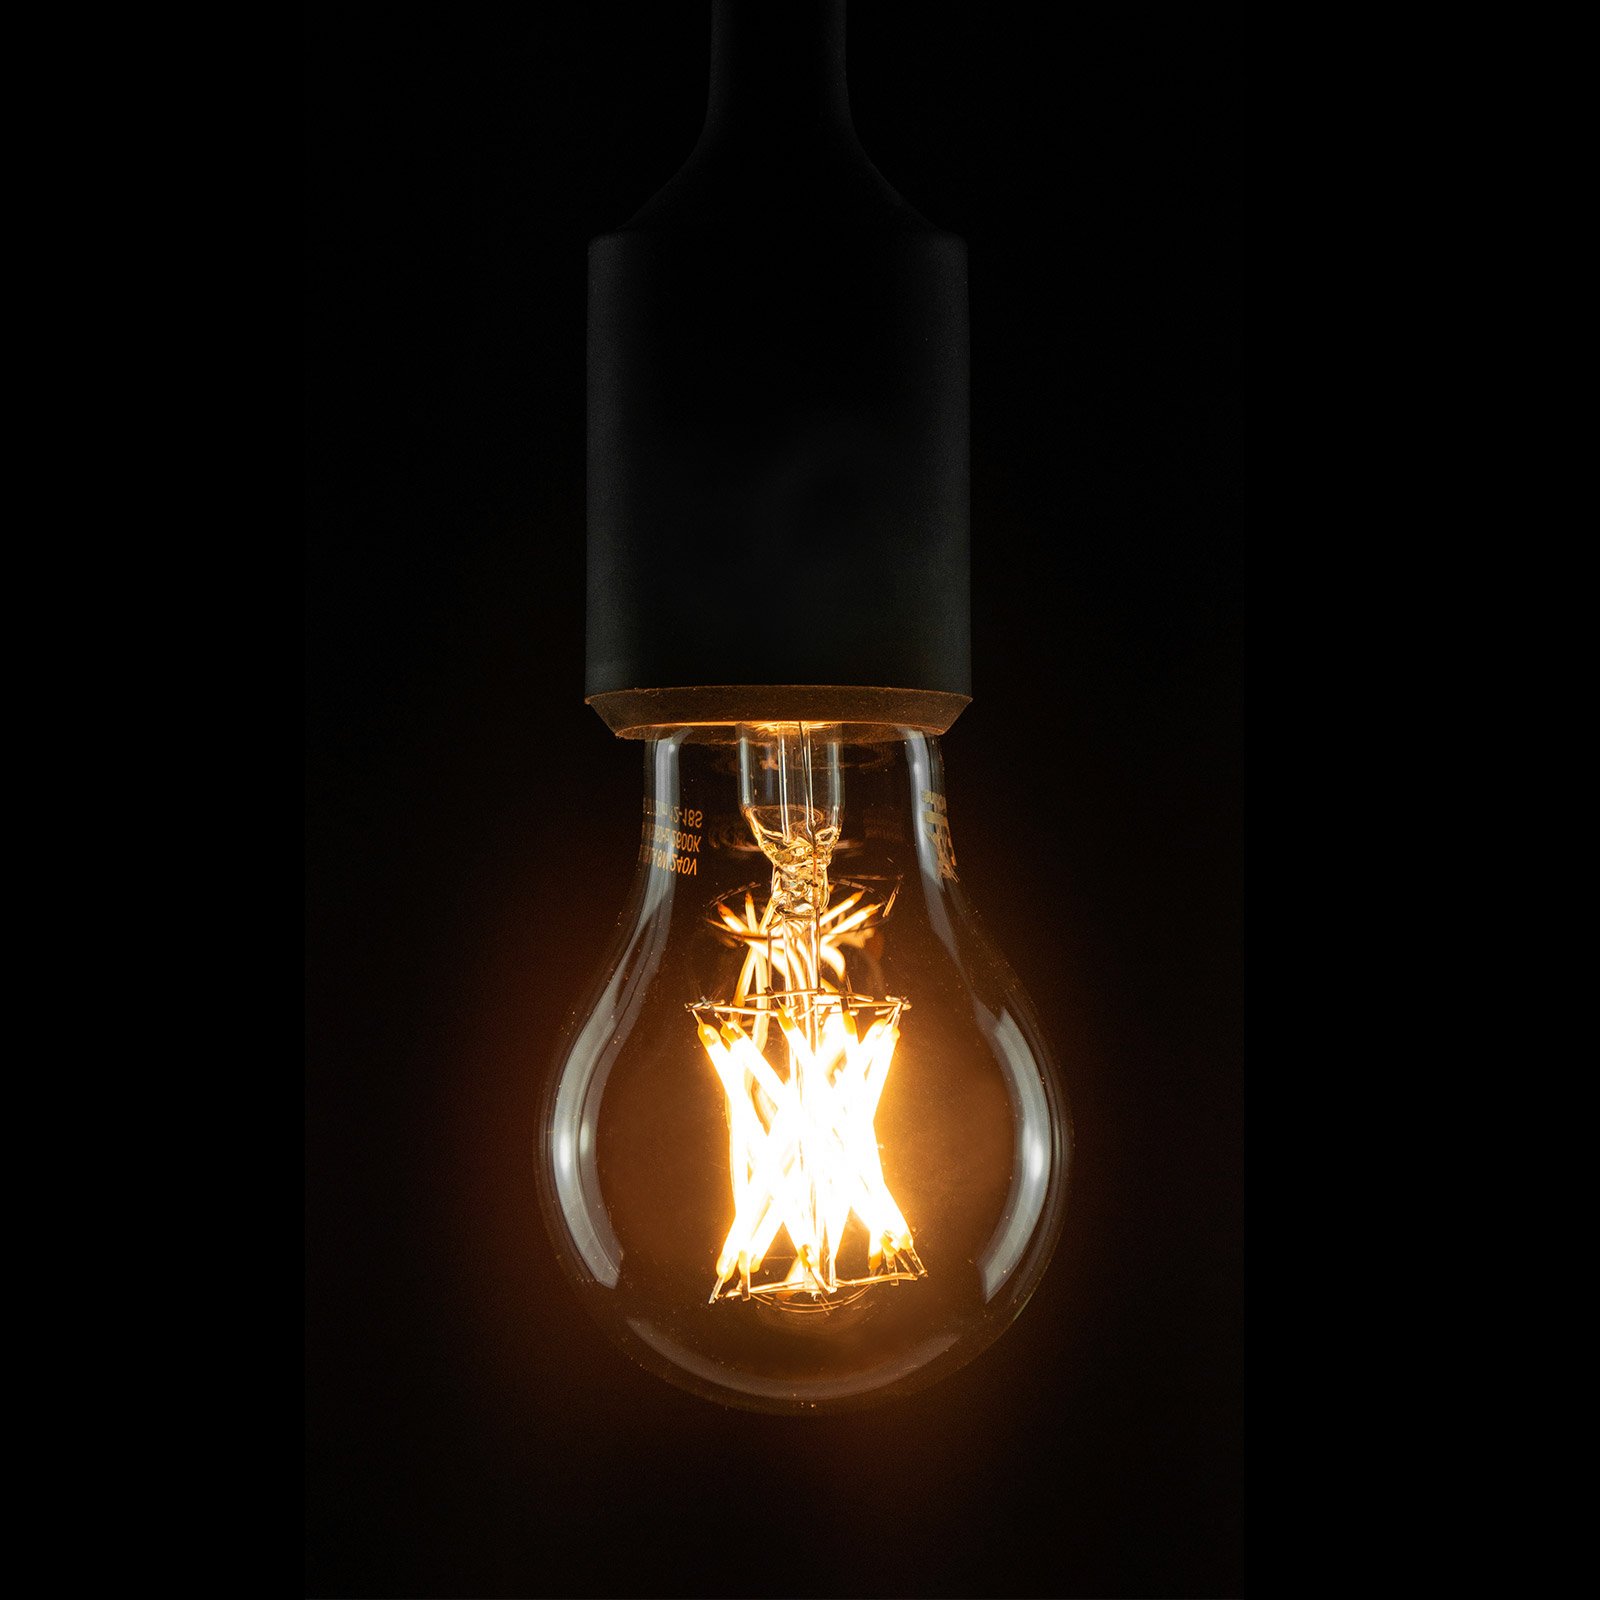 LED-Lampe E27 7W 927 LED in Kohlefadenoptik klar